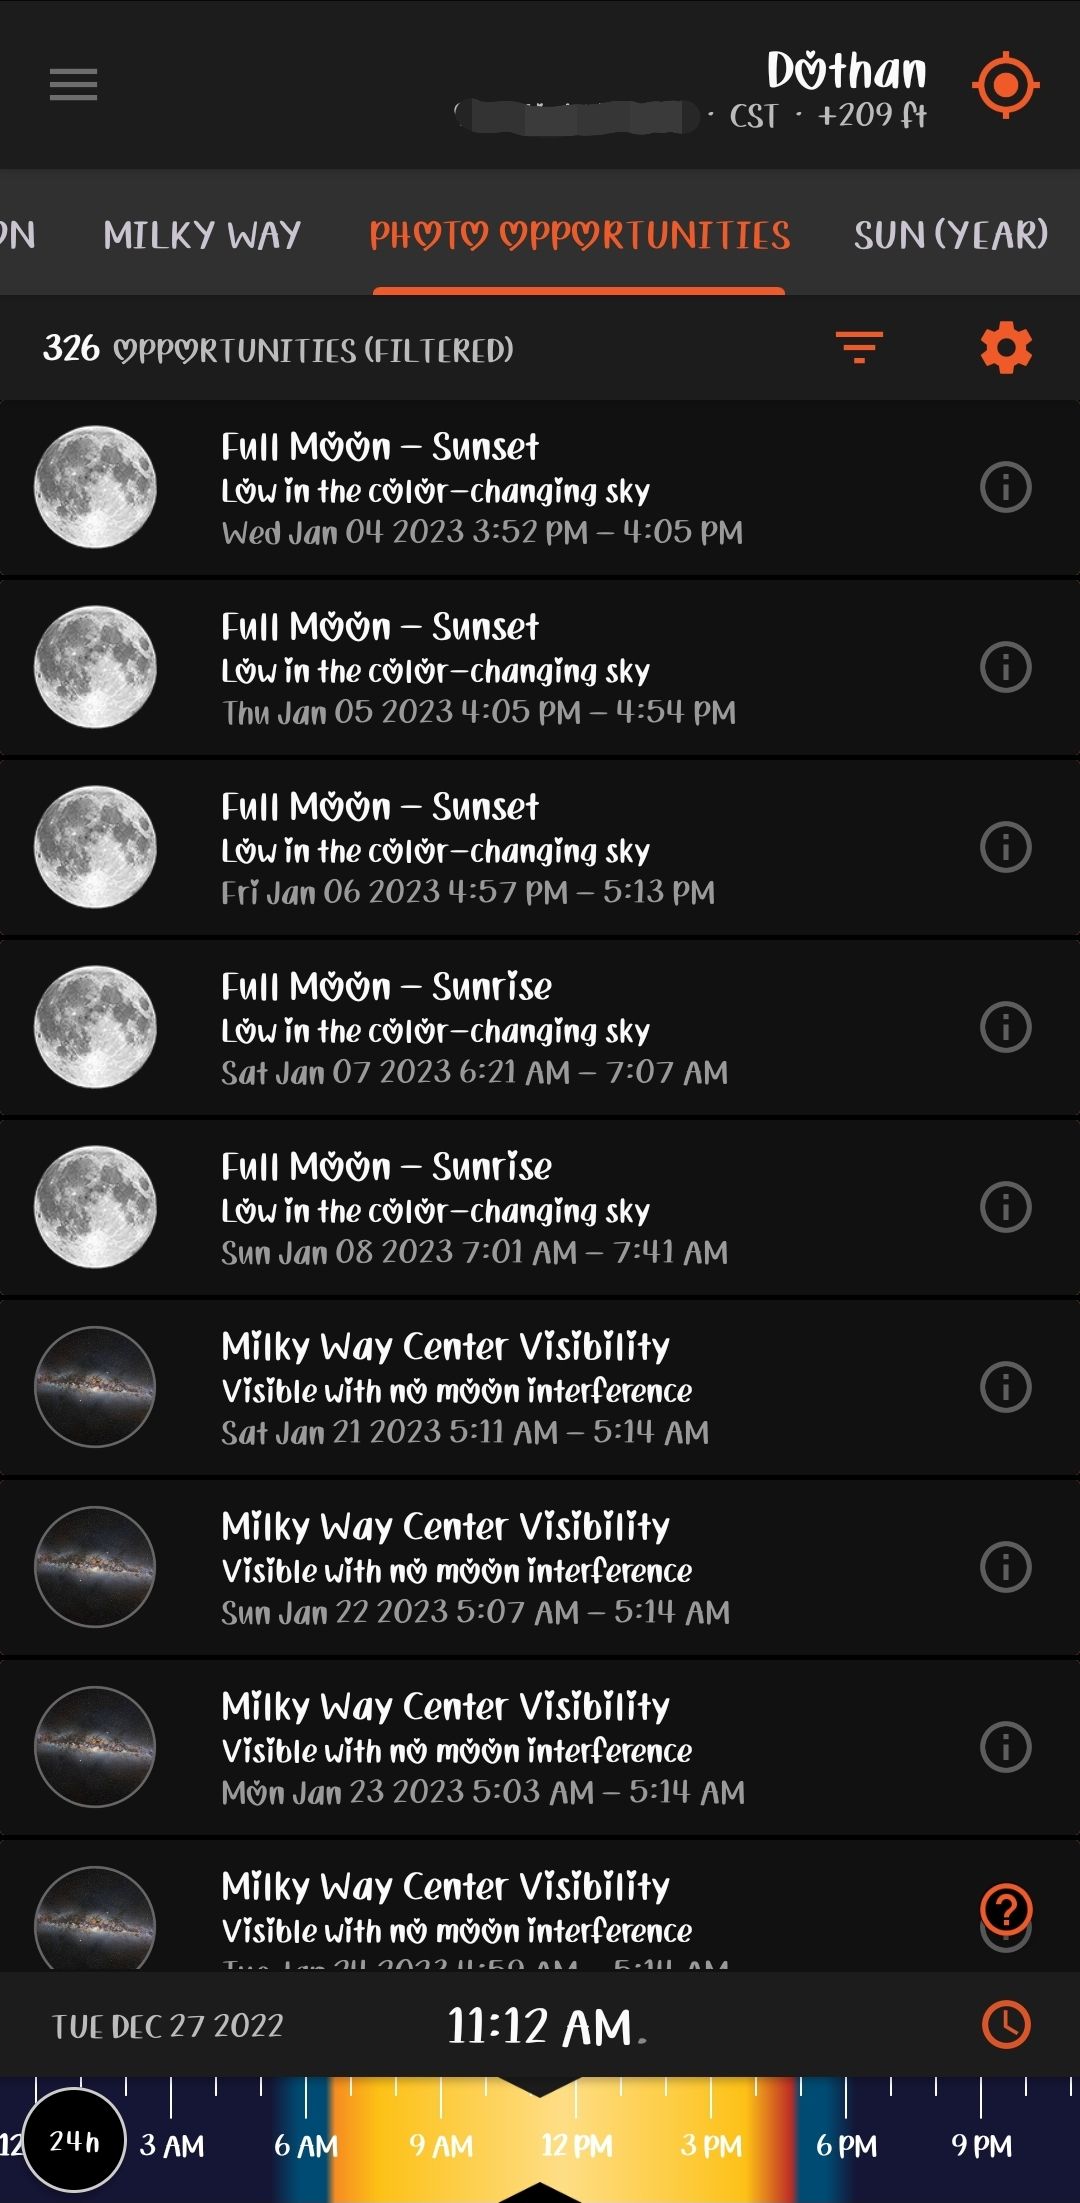 Android Photography Apps - Sun Surveyor